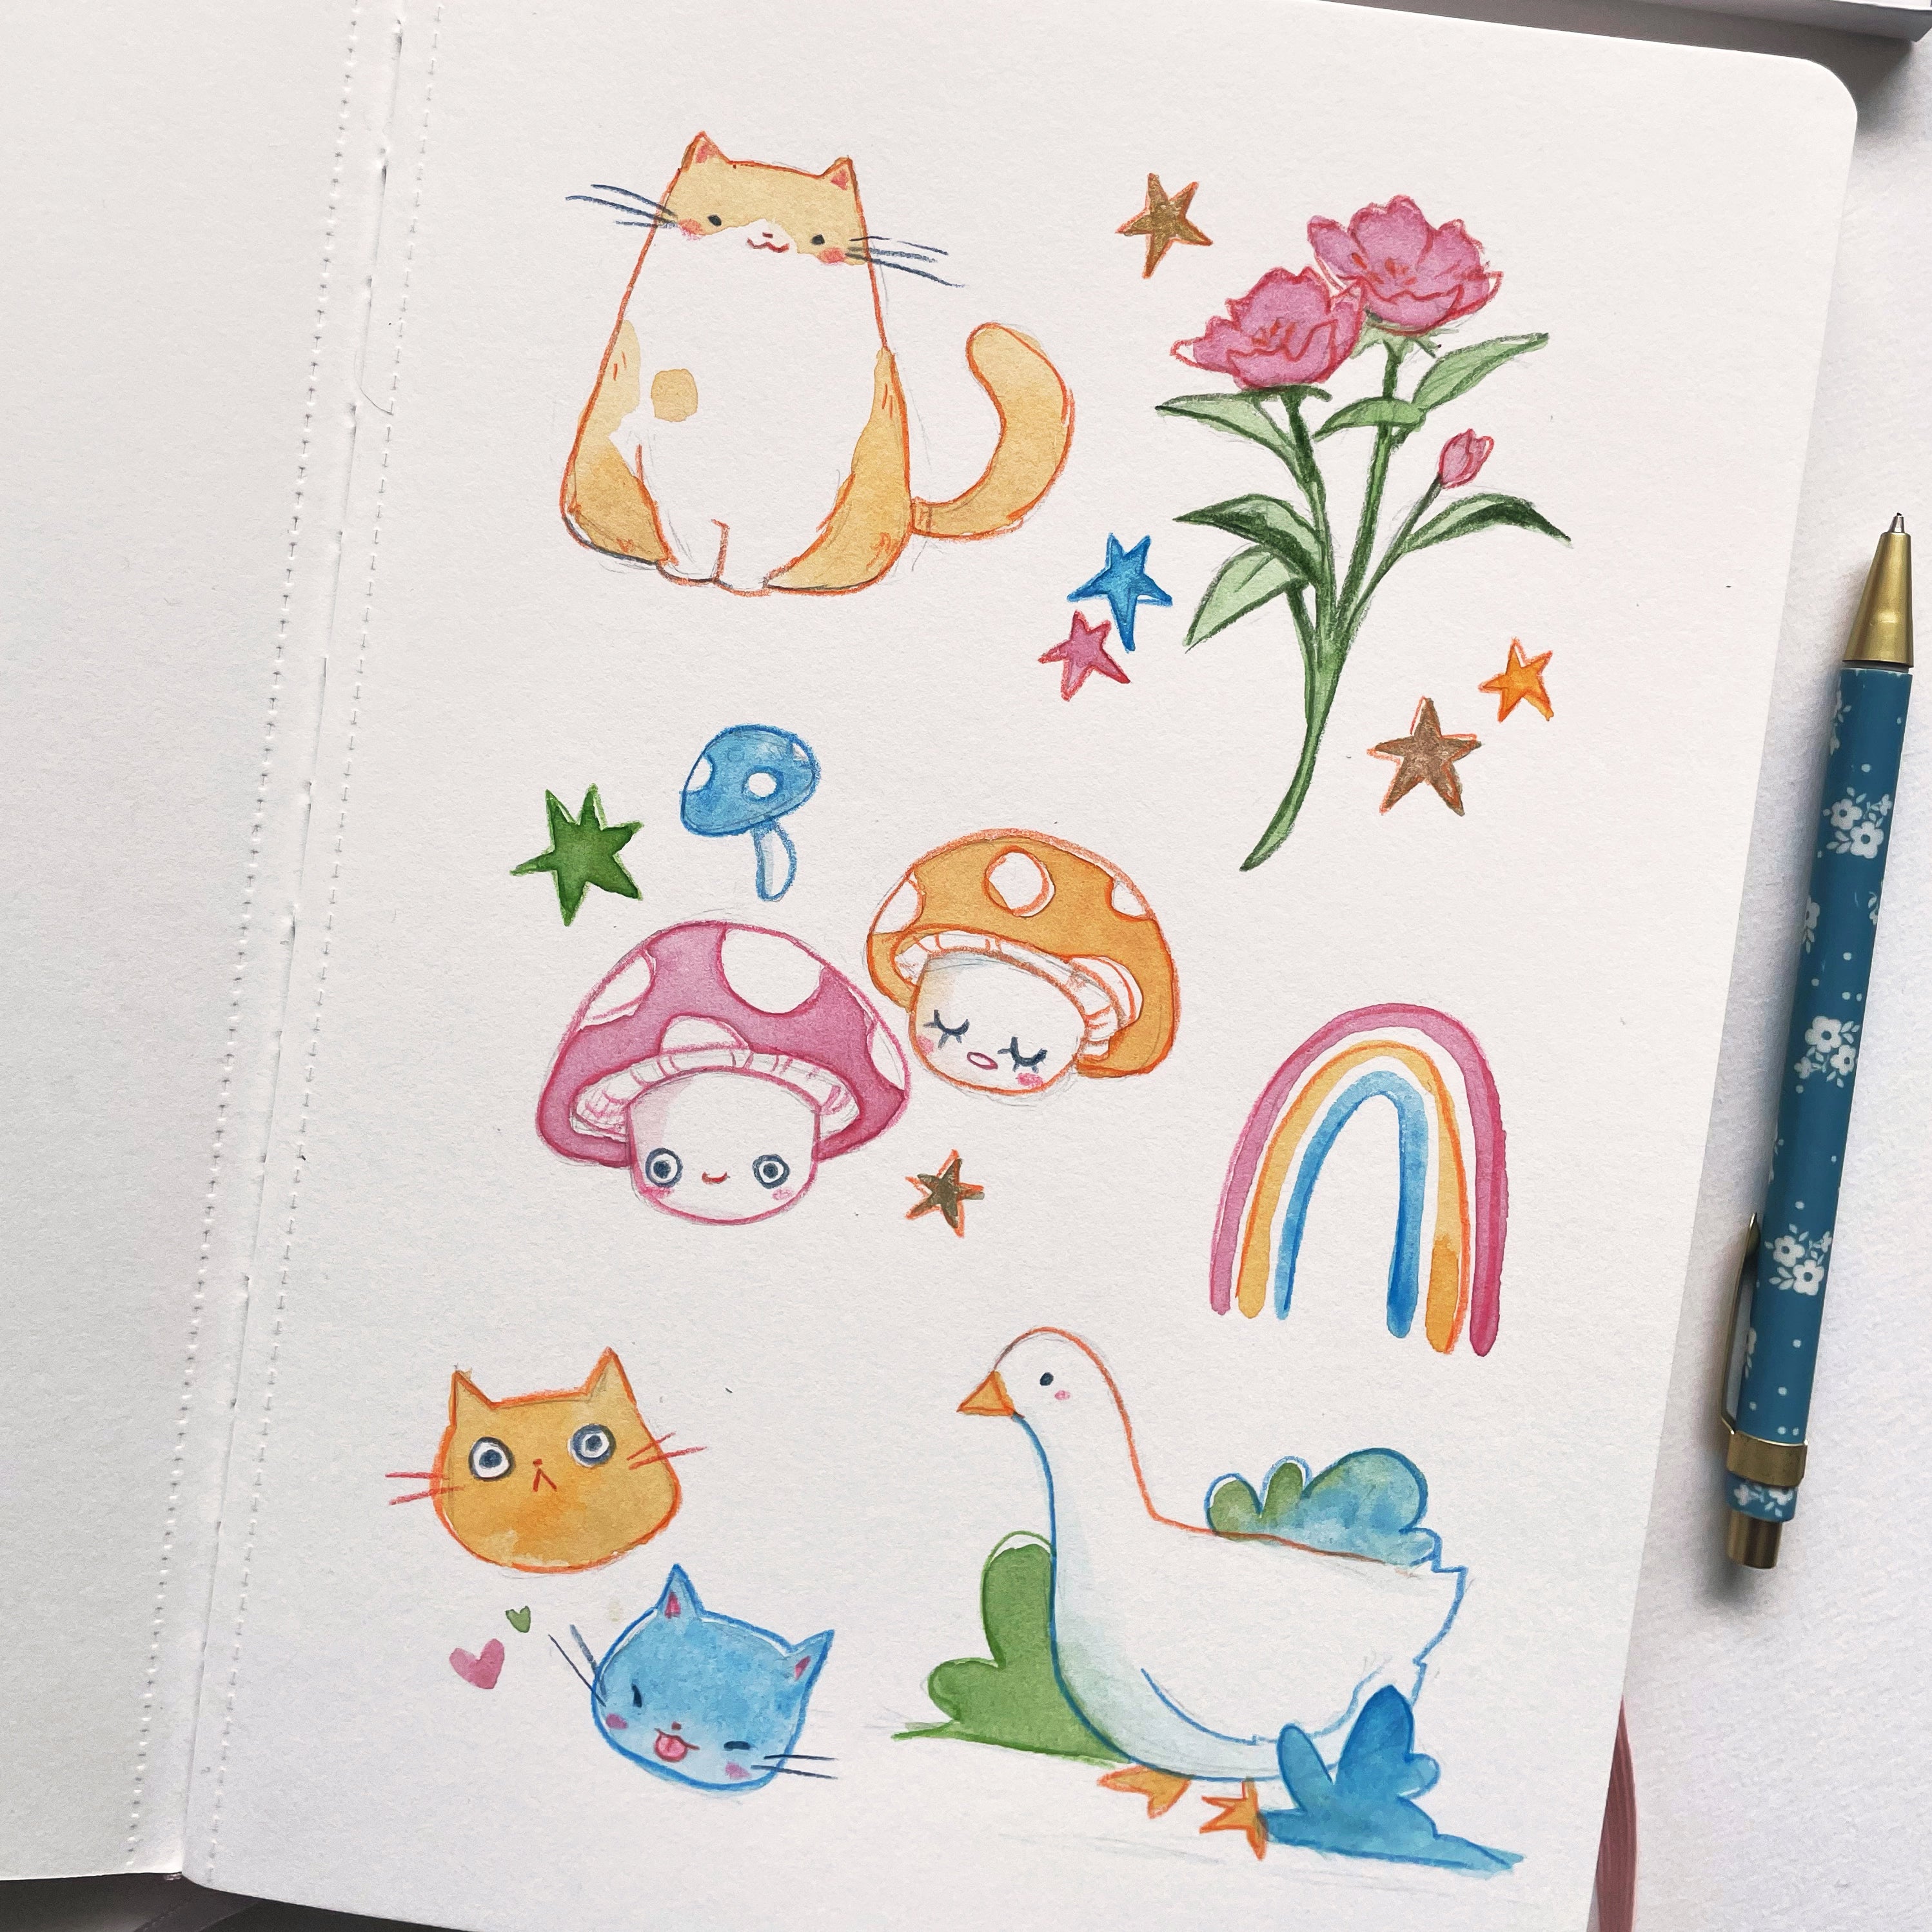 Simple Watercolor Notebook